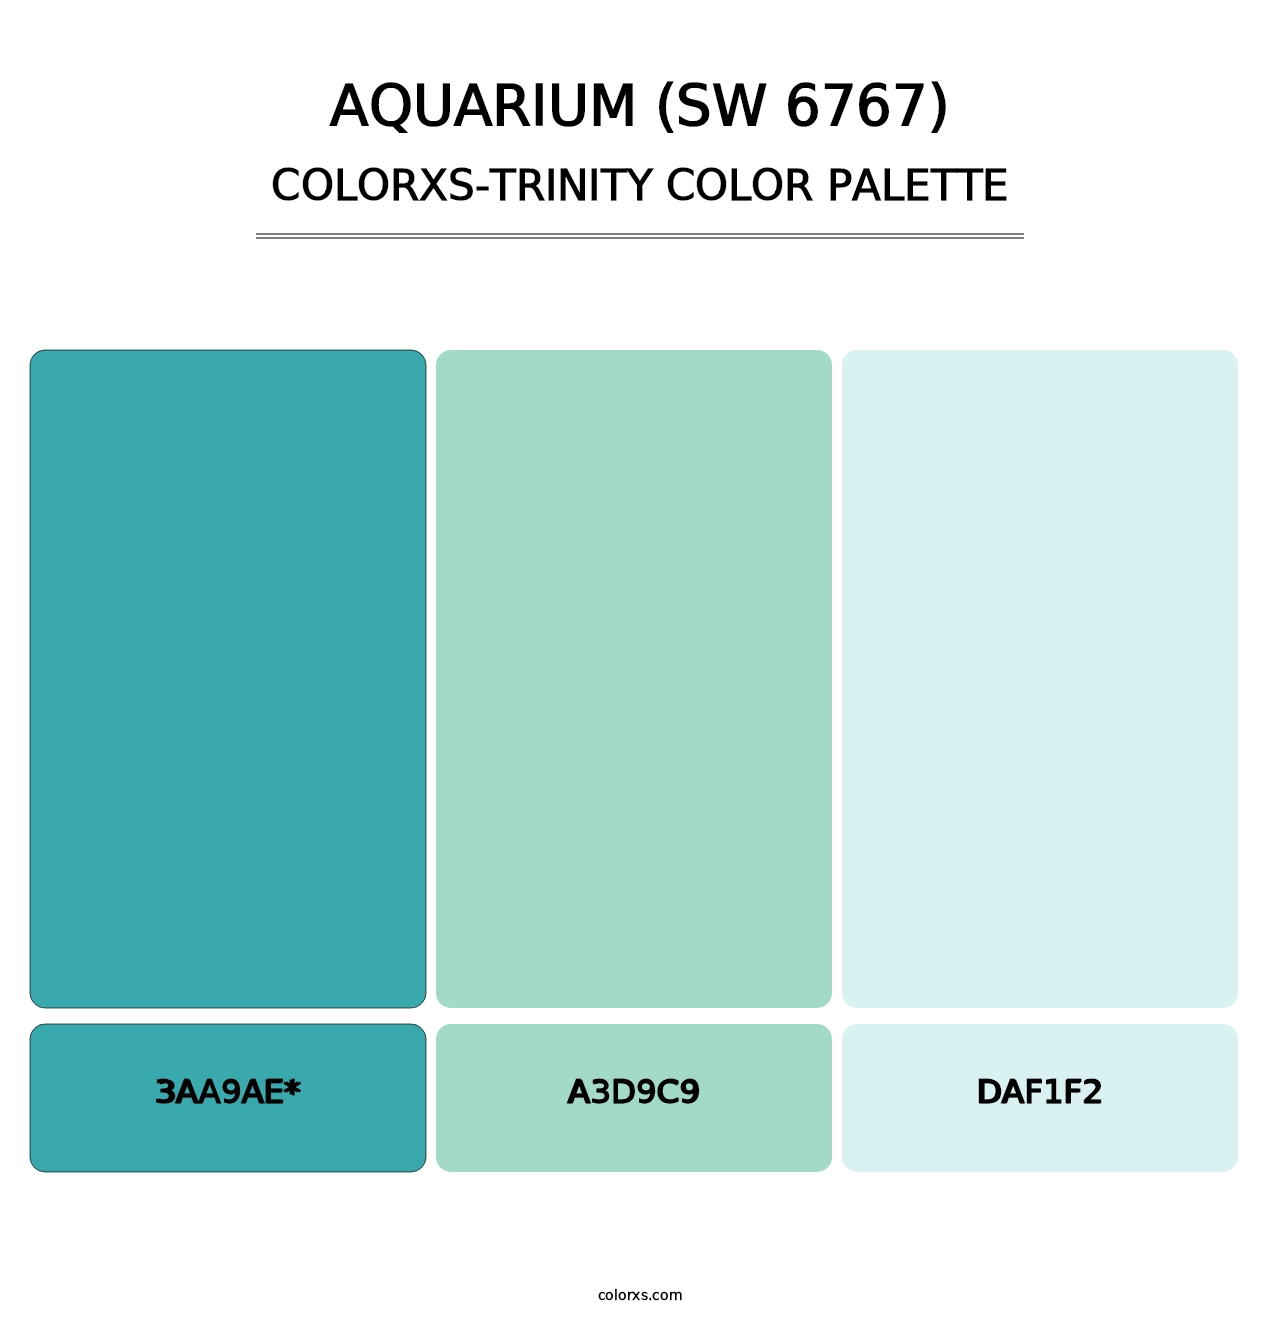 Aquarium (SW 6767) - Colorxs Trinity Palette